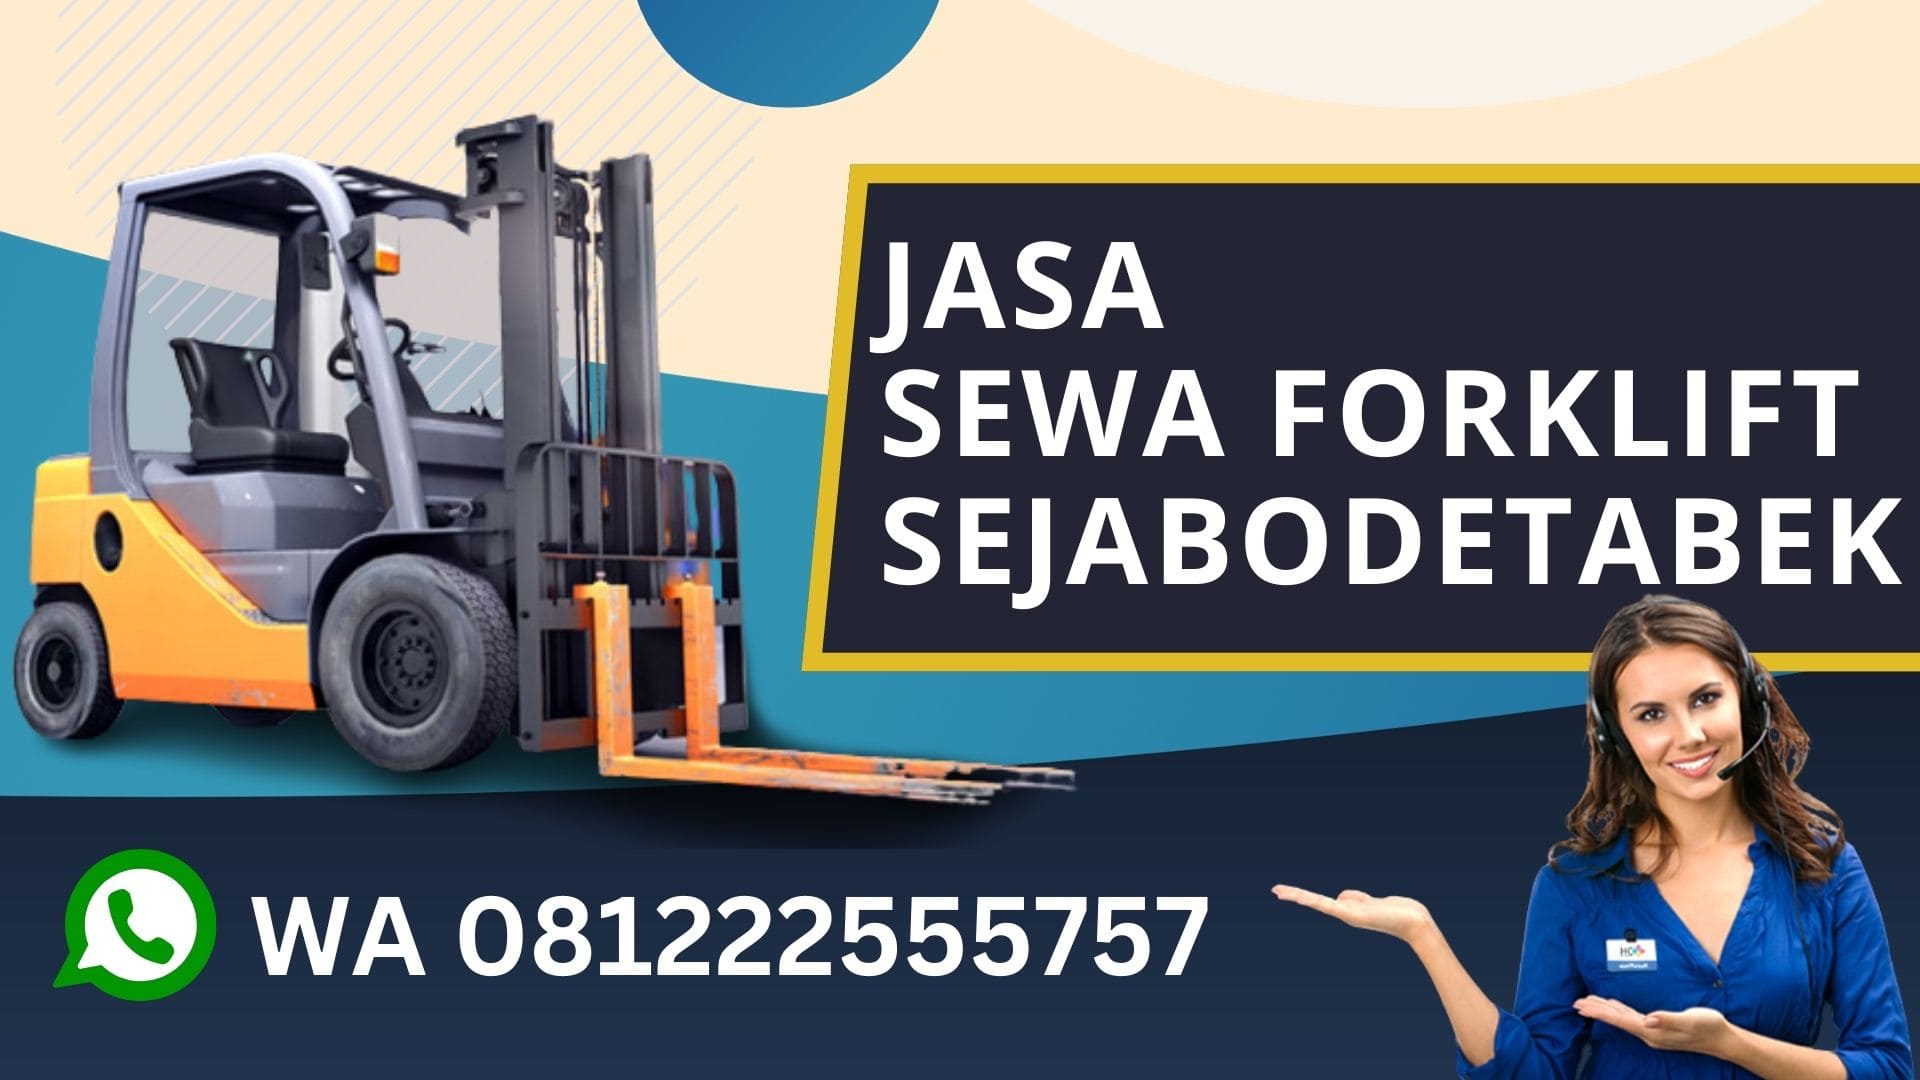 WA 081222555757 Sewa Forklift Jakarta, Rental Forklift, biaya sewa forklift harian, rental forklift bulanan